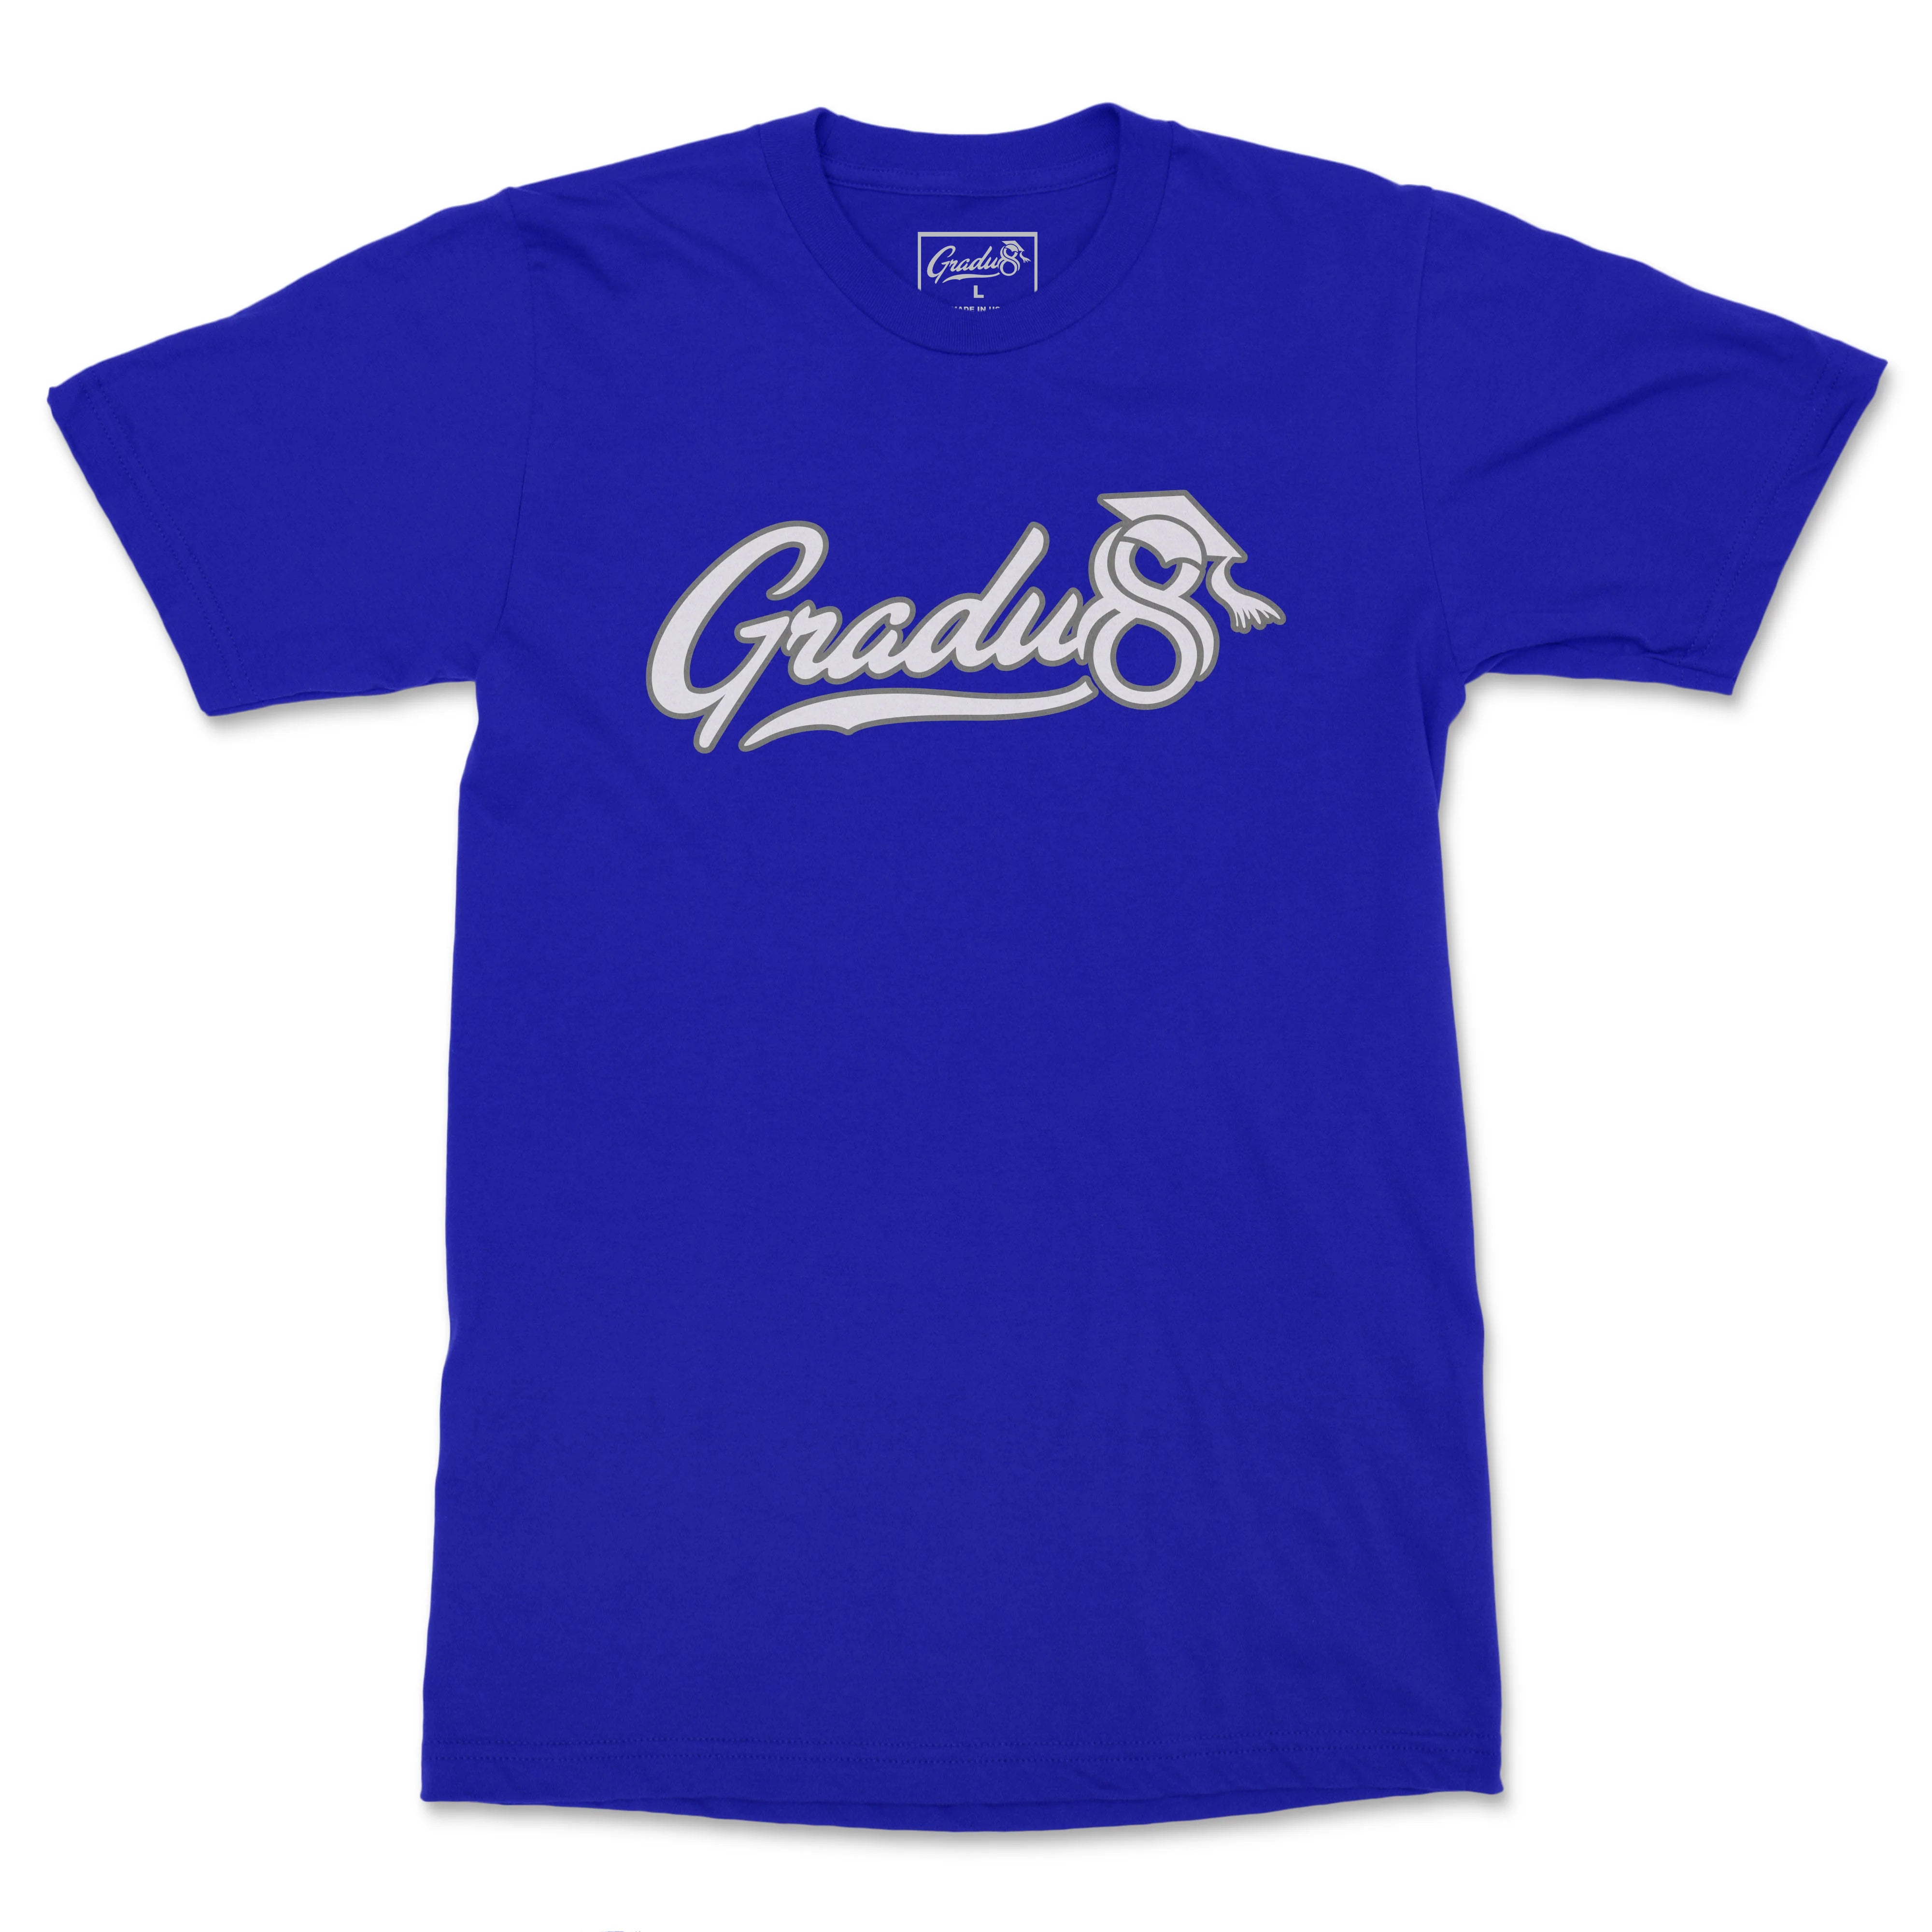 Gradu8 Metallic border Premium T-shirt - Royal Blue